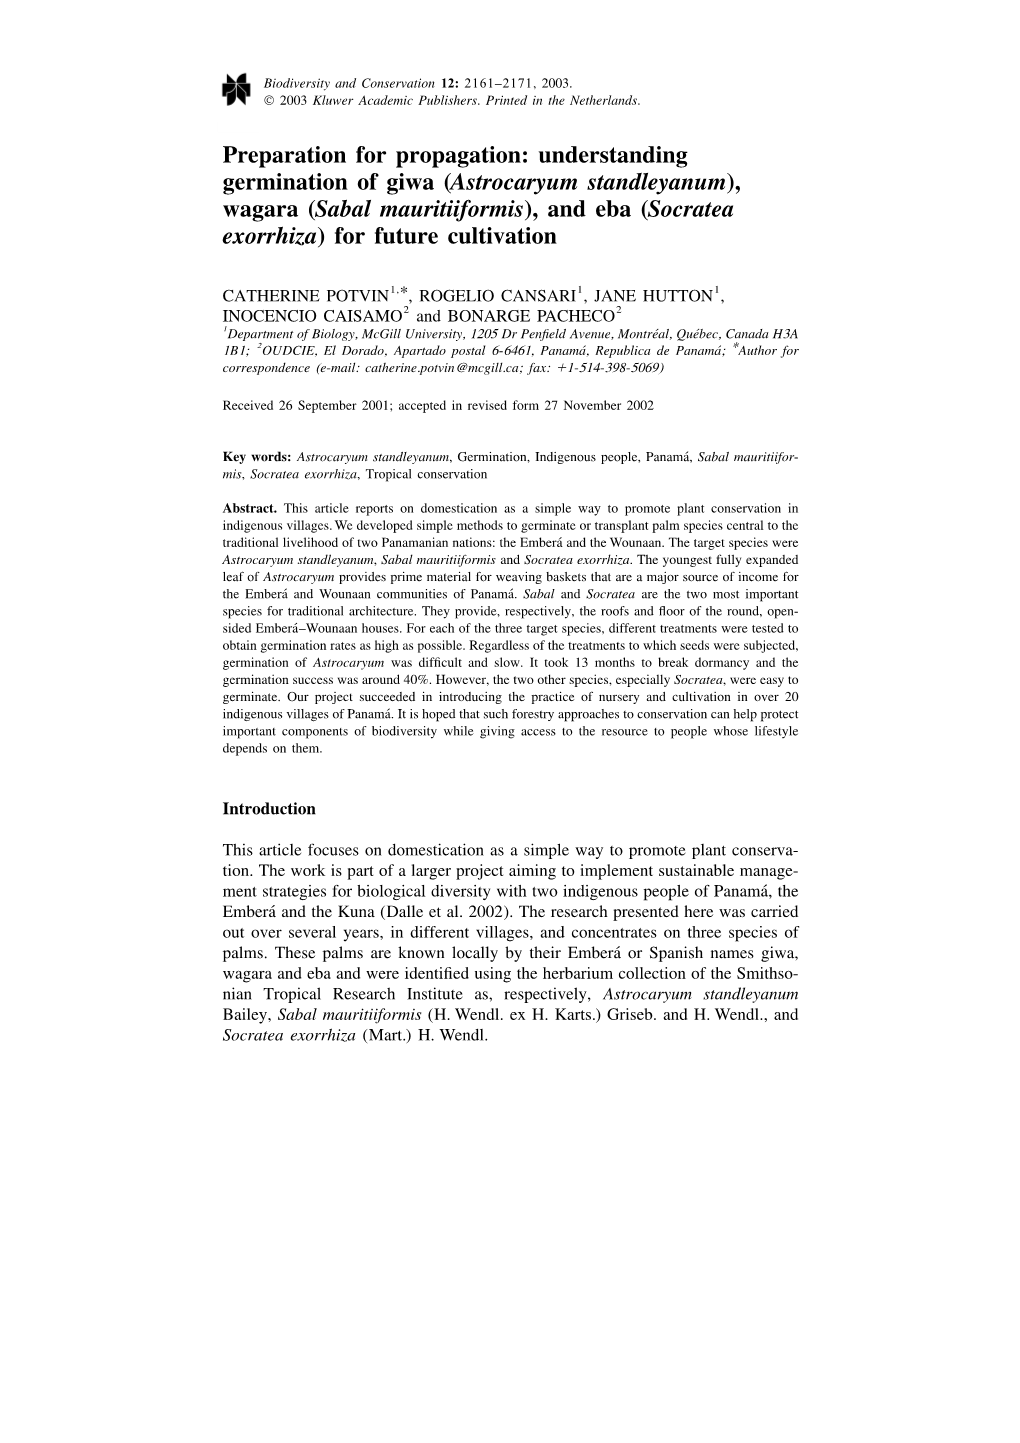 Preparation for Propagation: Understanding Germination of Giwa (Astrocaryum Standleyanum), Wagara (Sabal Mauritiiformis), and Eb